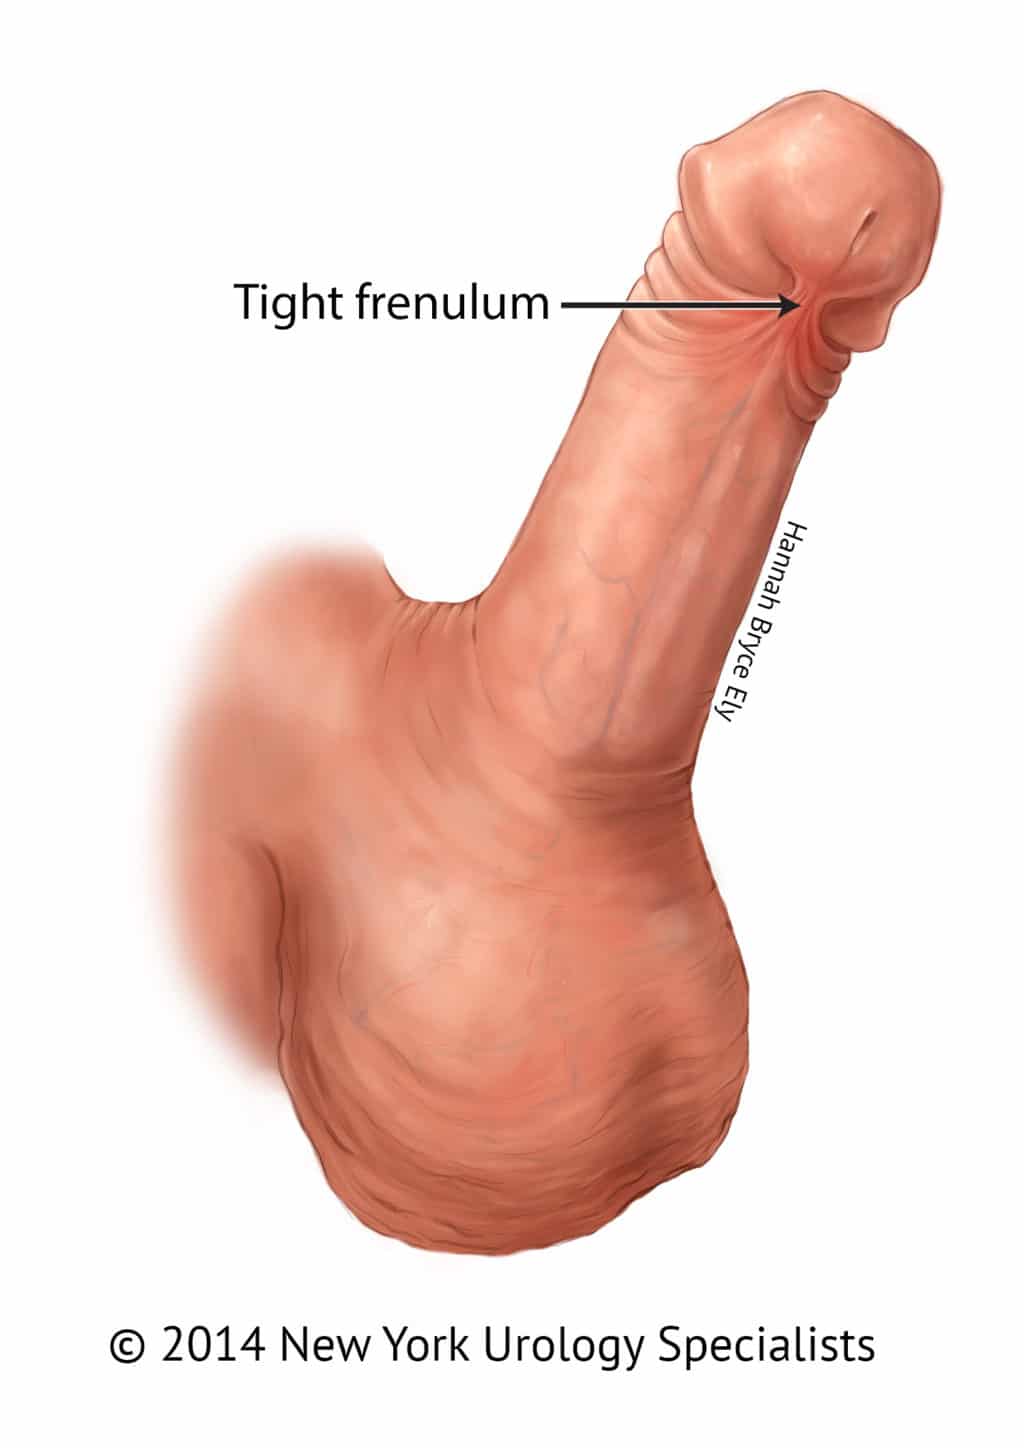 Френулопластика (френулотомия) полового члена для лечения короткой уздечки  крайней плоти - Adult Circumcision in NYC